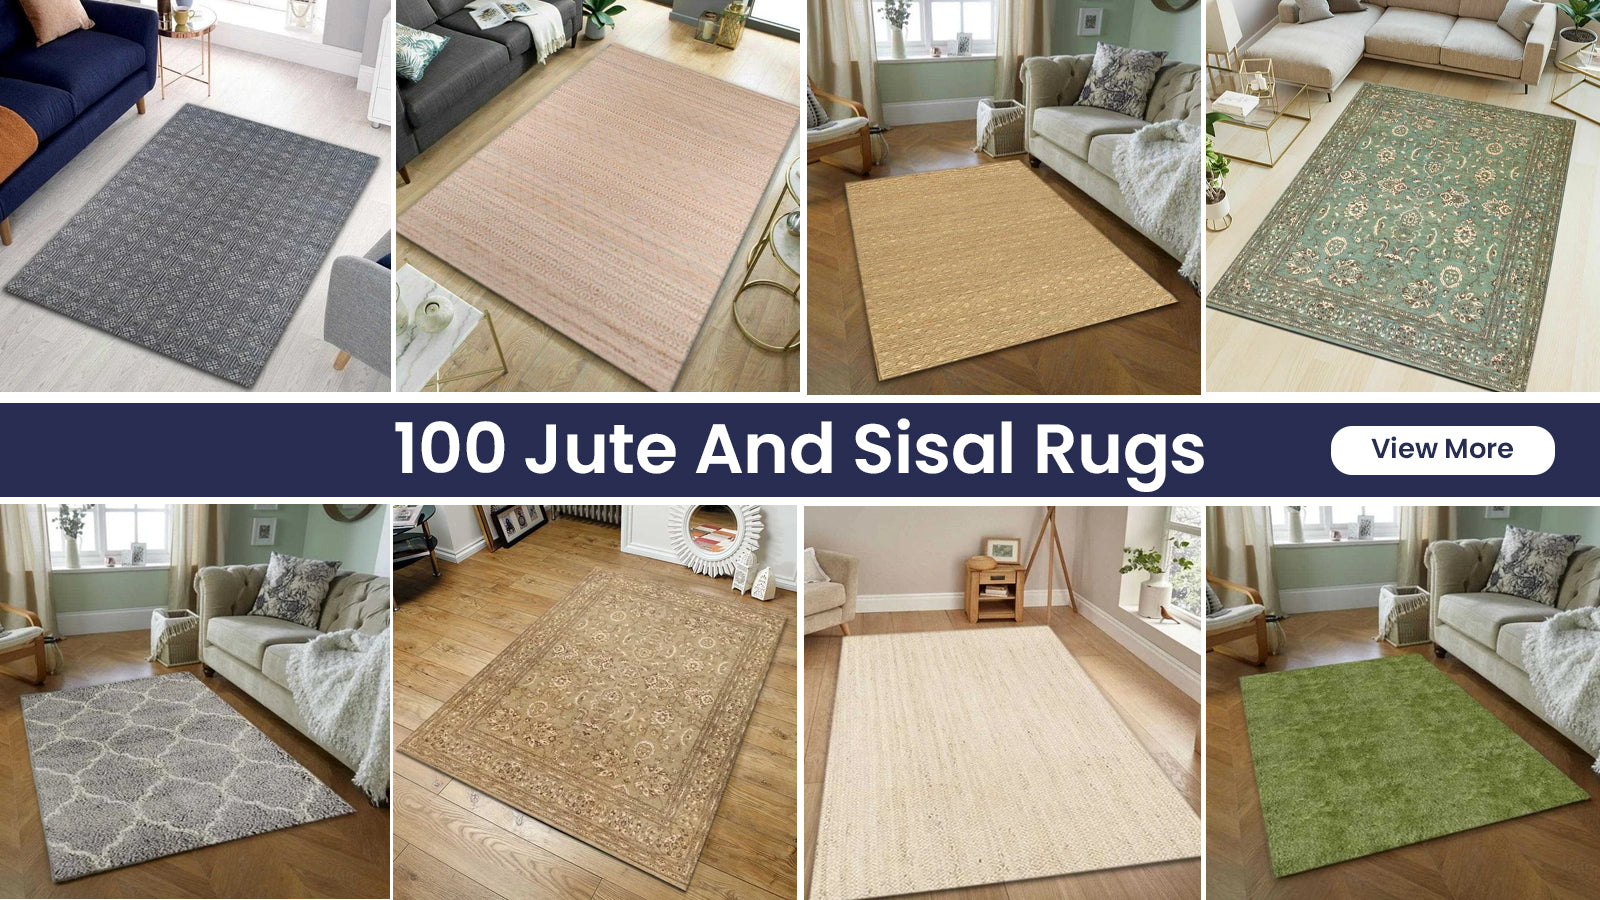 Custom-made sisal rugs complete guide to choosing them